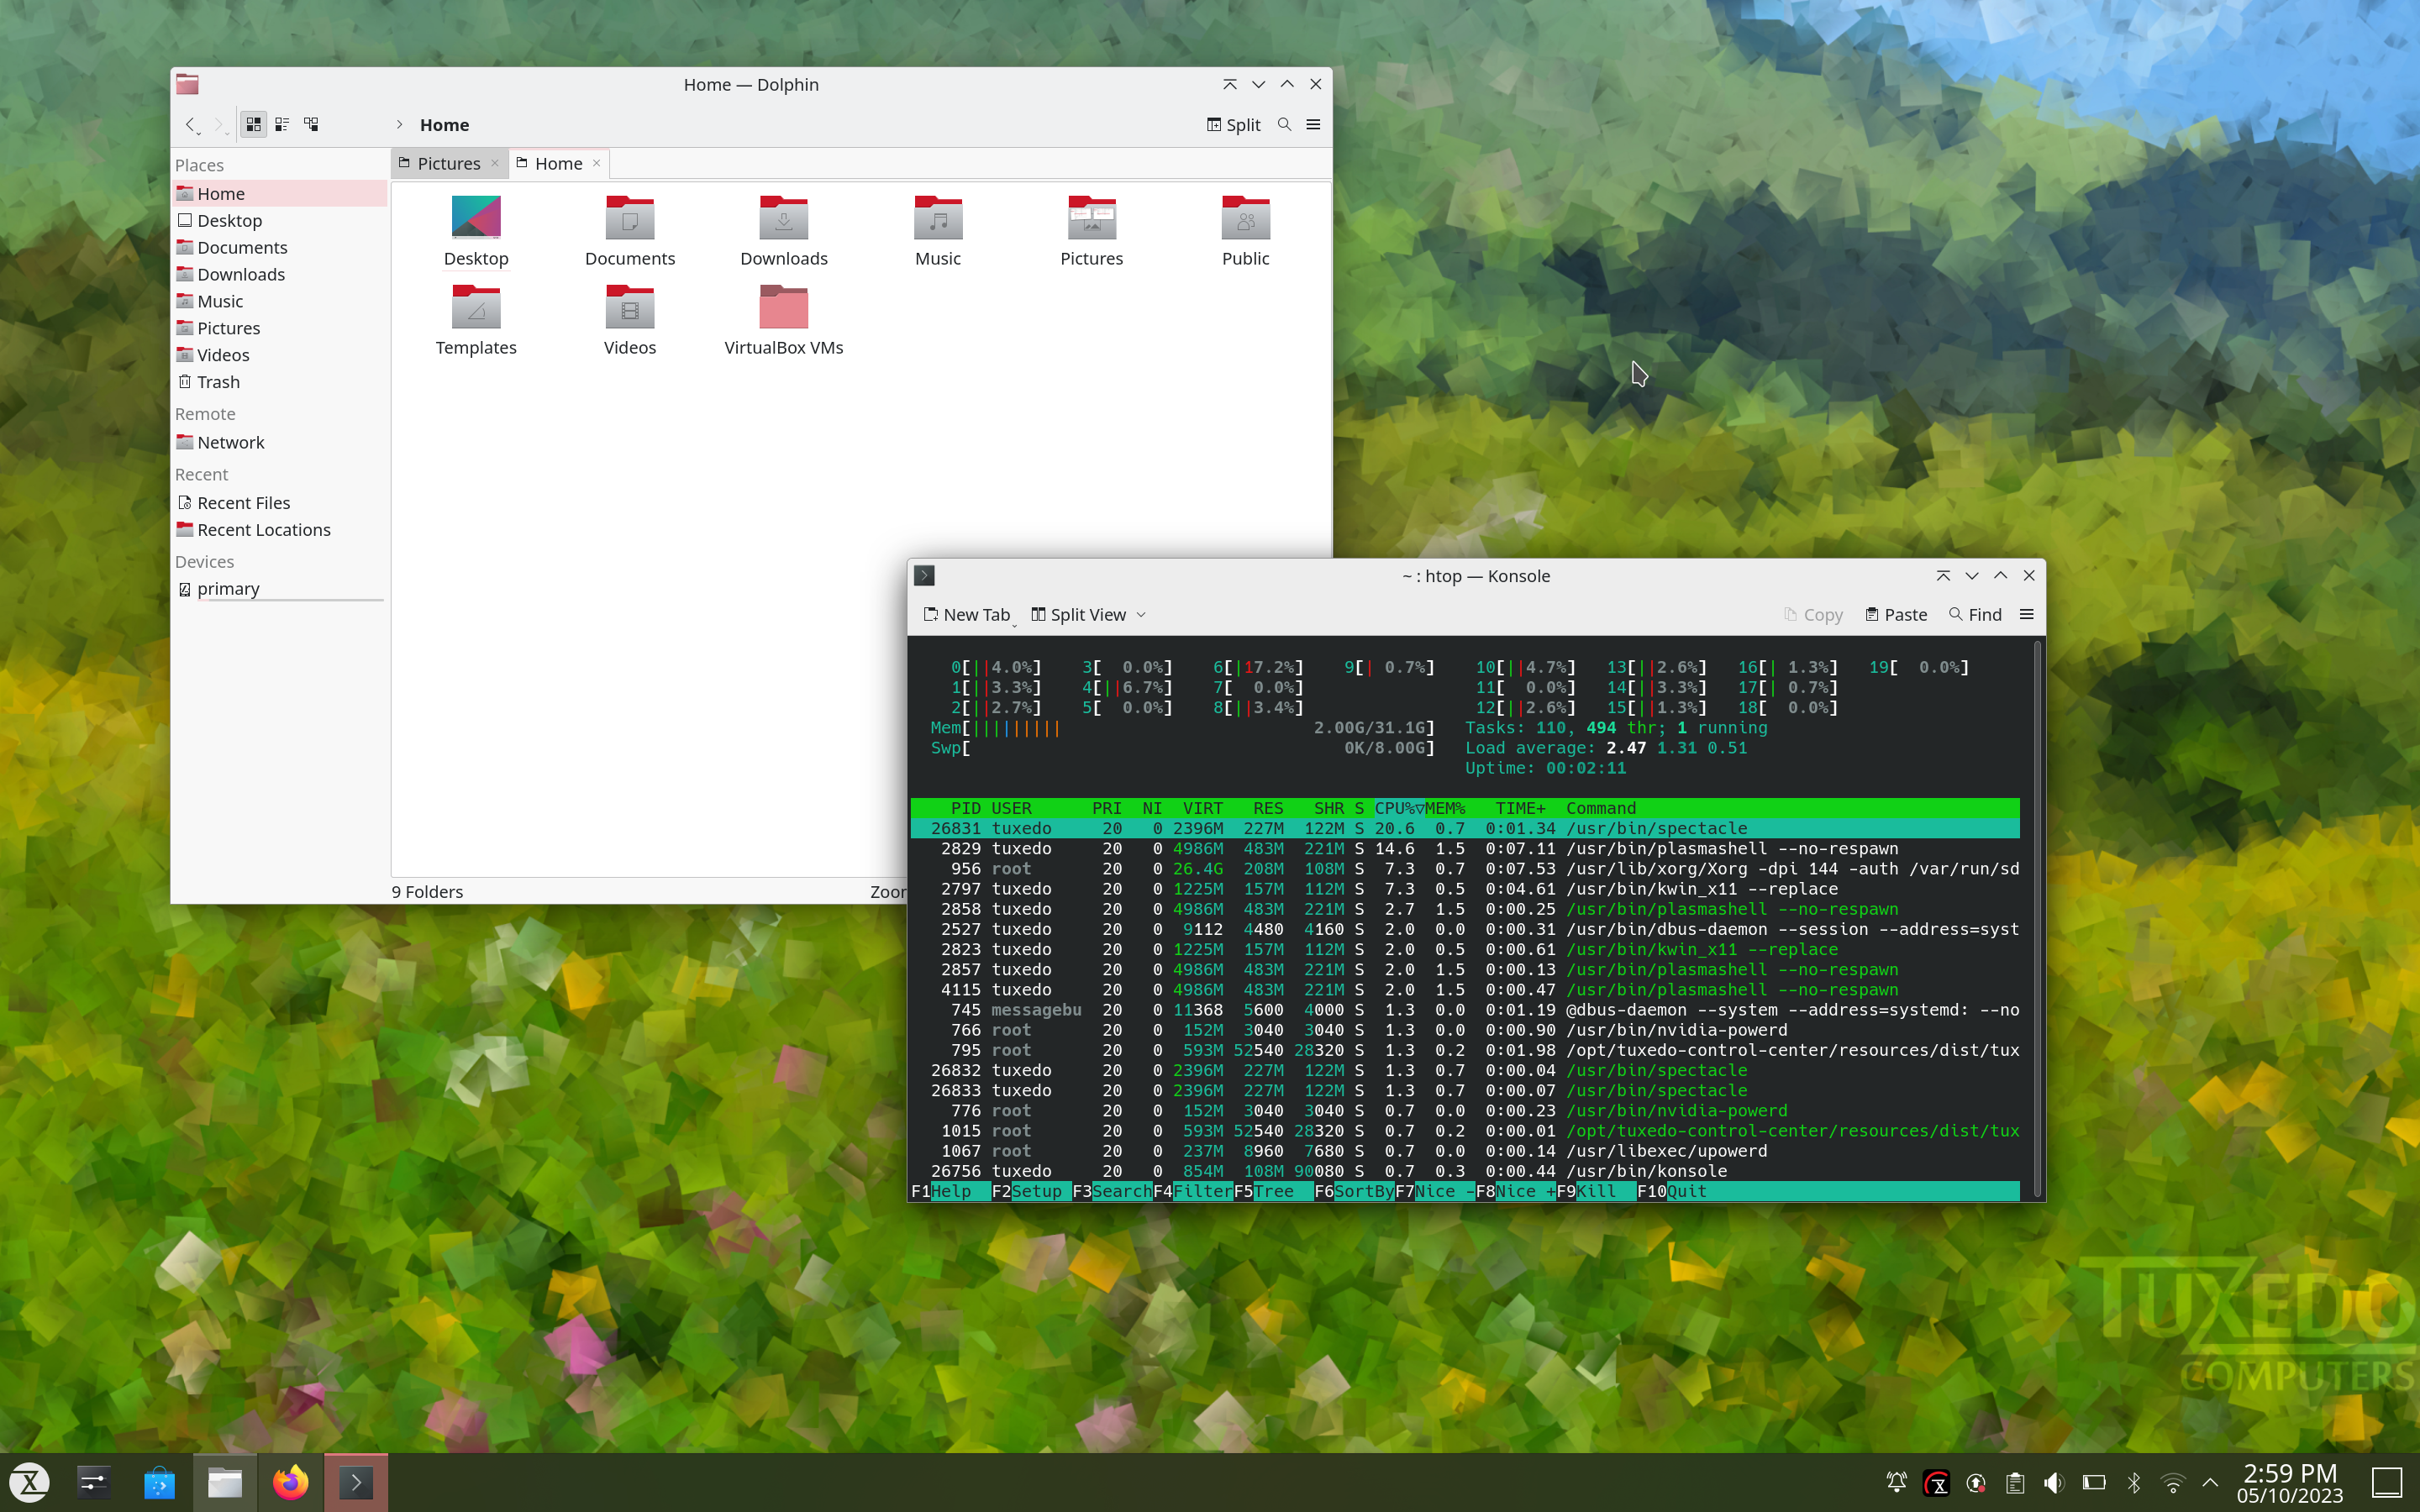 TUXEDO OS now uses KDE Plasma as its desktop environment.